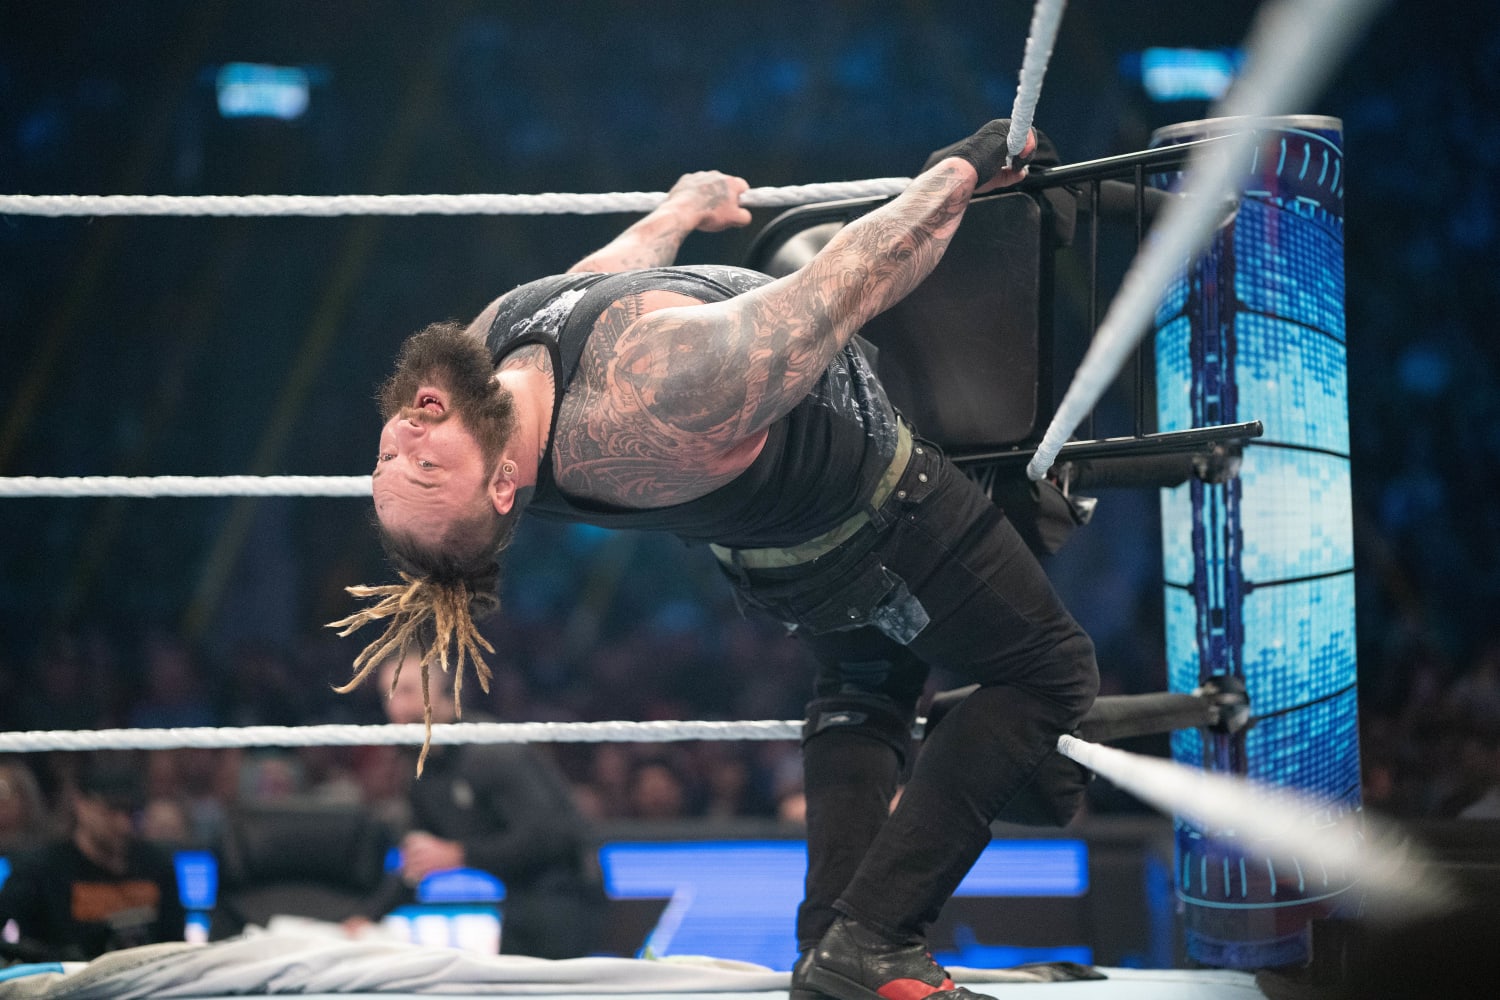 WWE Wrestler Bray Wyatt Dies Suddenly at 36, Leaving Wrestling Fans Shocked  and in Mourning - IGN